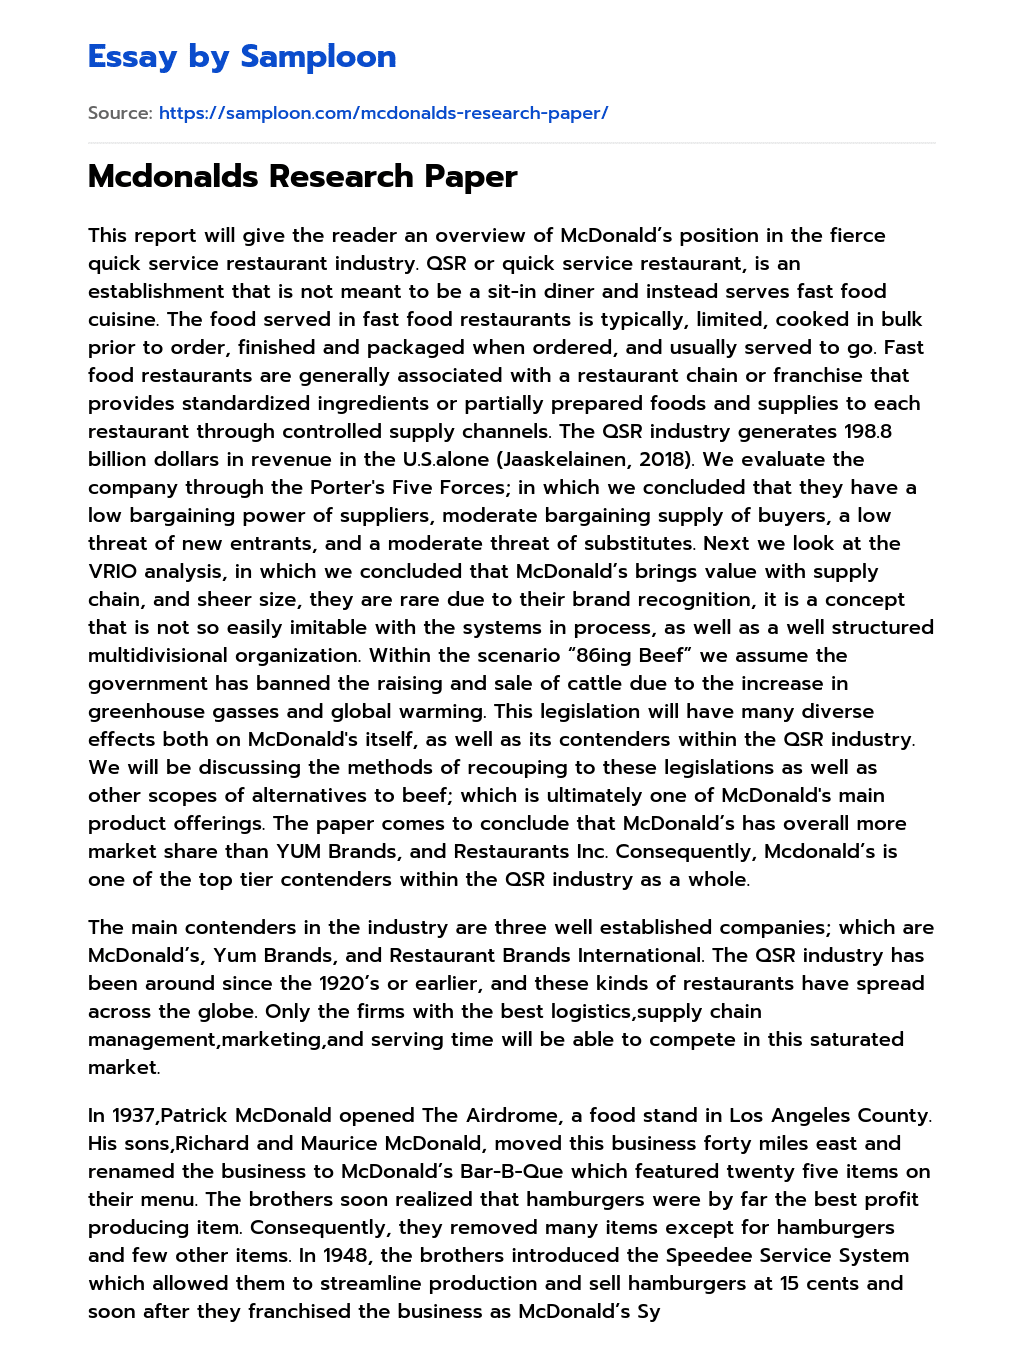 Mcdonalds Research Paper essay